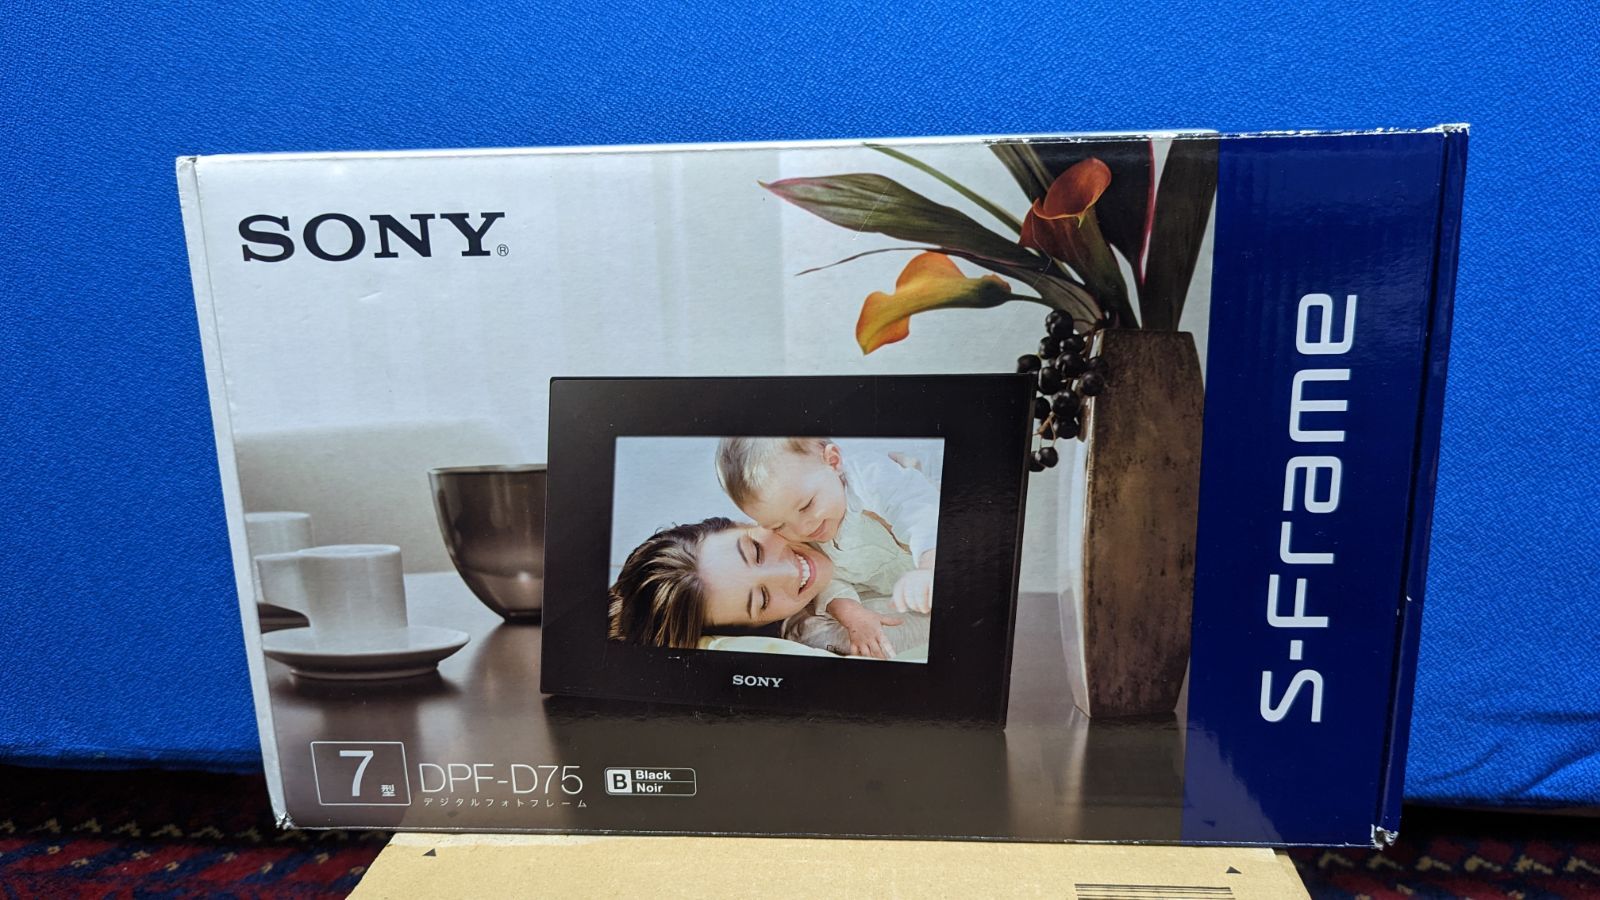 SONY デジタルフォトフレーム 7型 DPF D720 - テレビ/映像機器